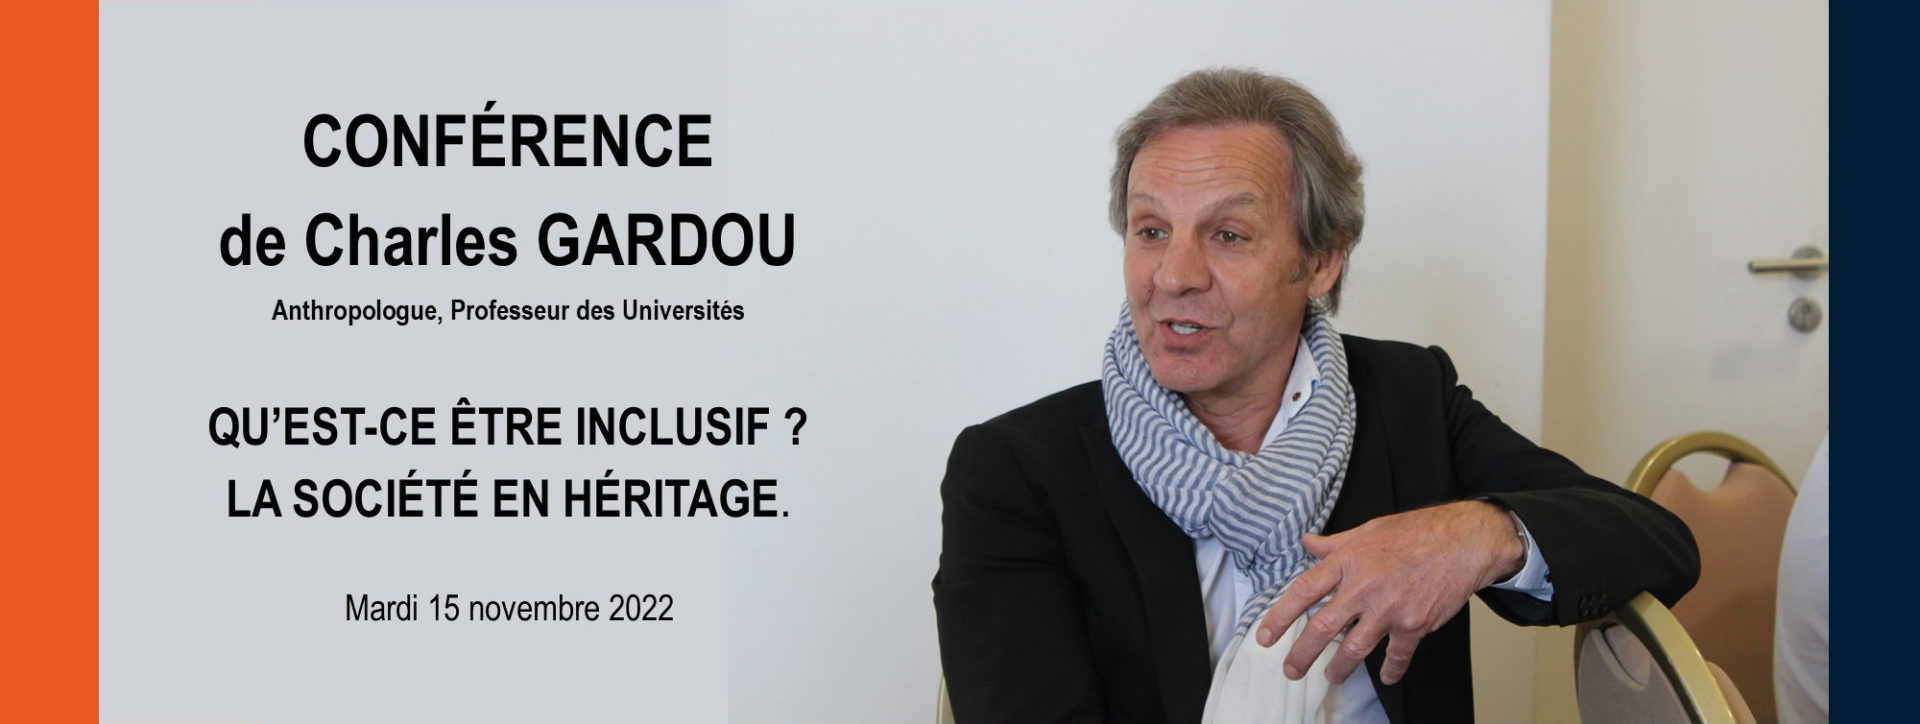 Conférence Charles Gardou